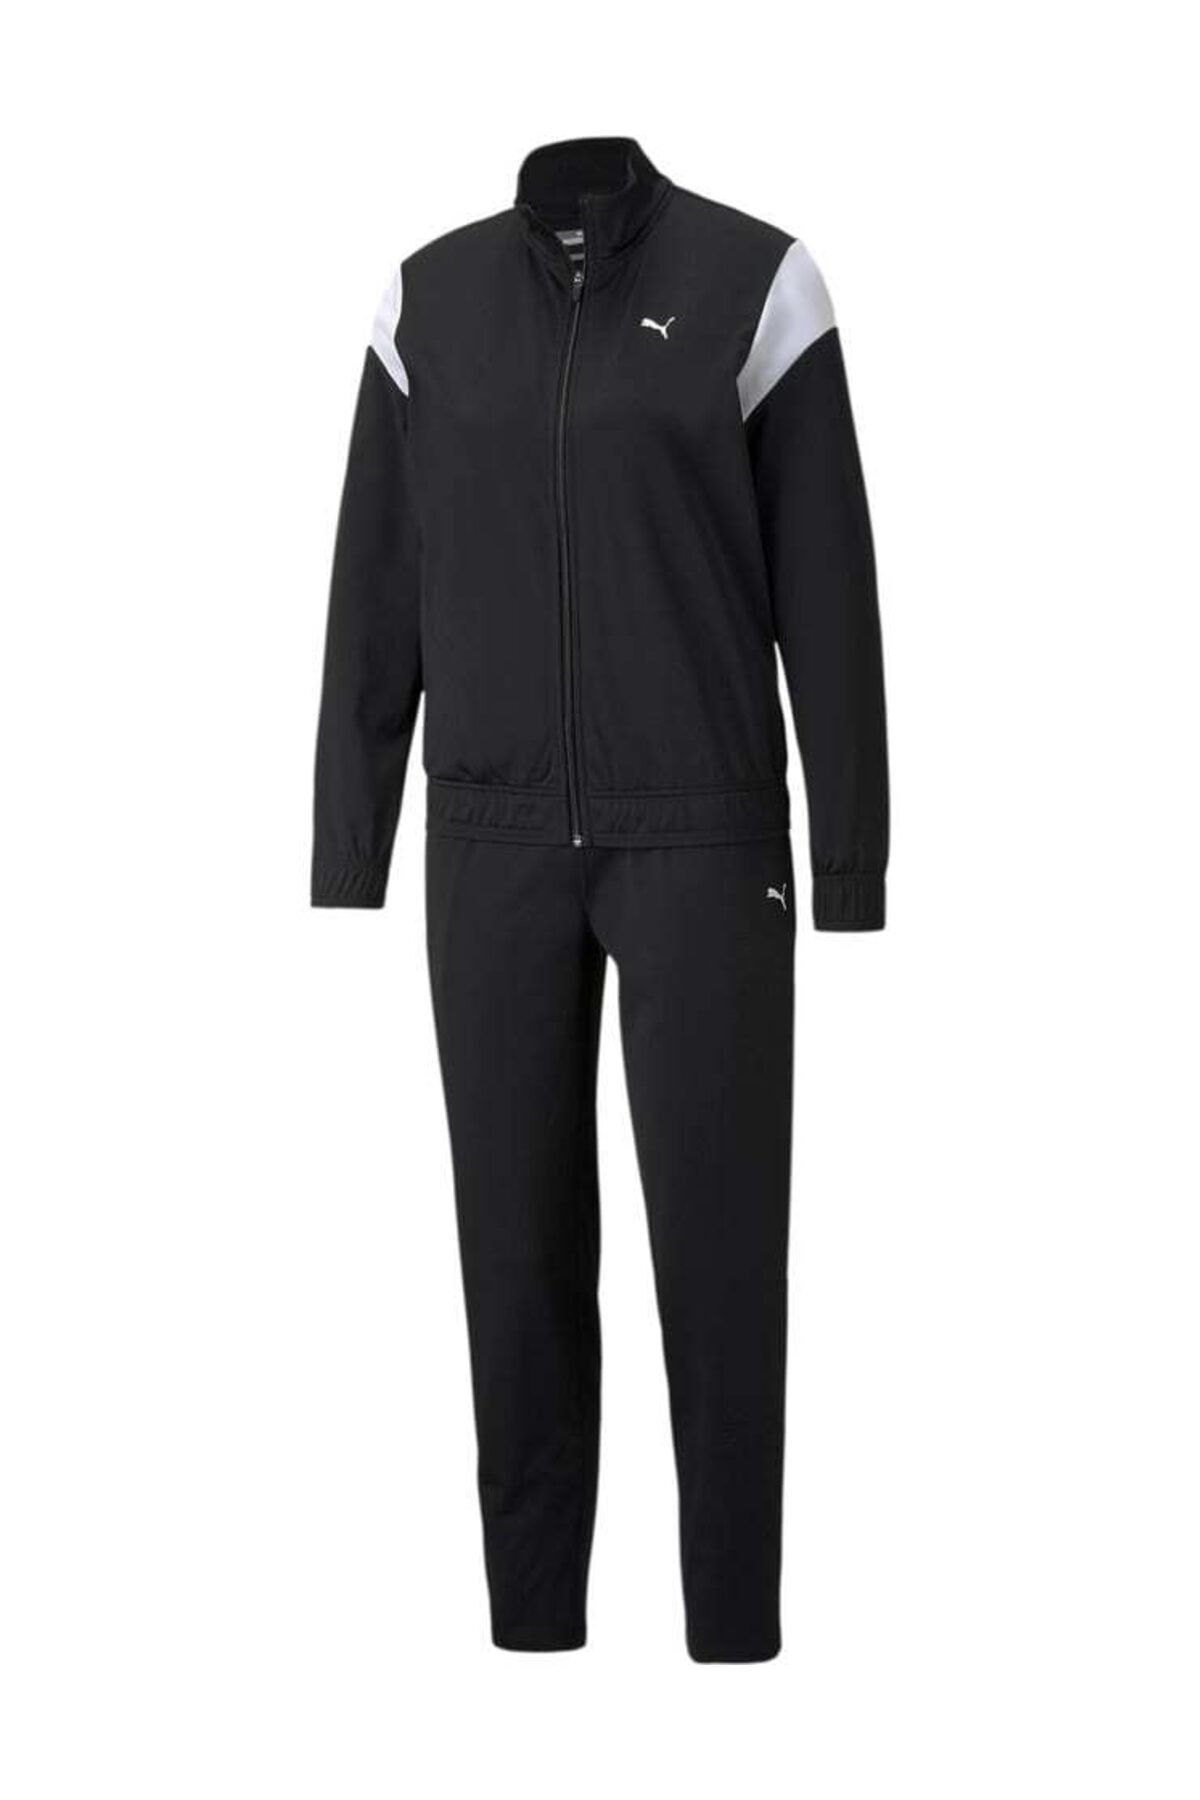 Puma Kadın Spor Eşofman Takımı - Classic Tricot Suit op - 58913301